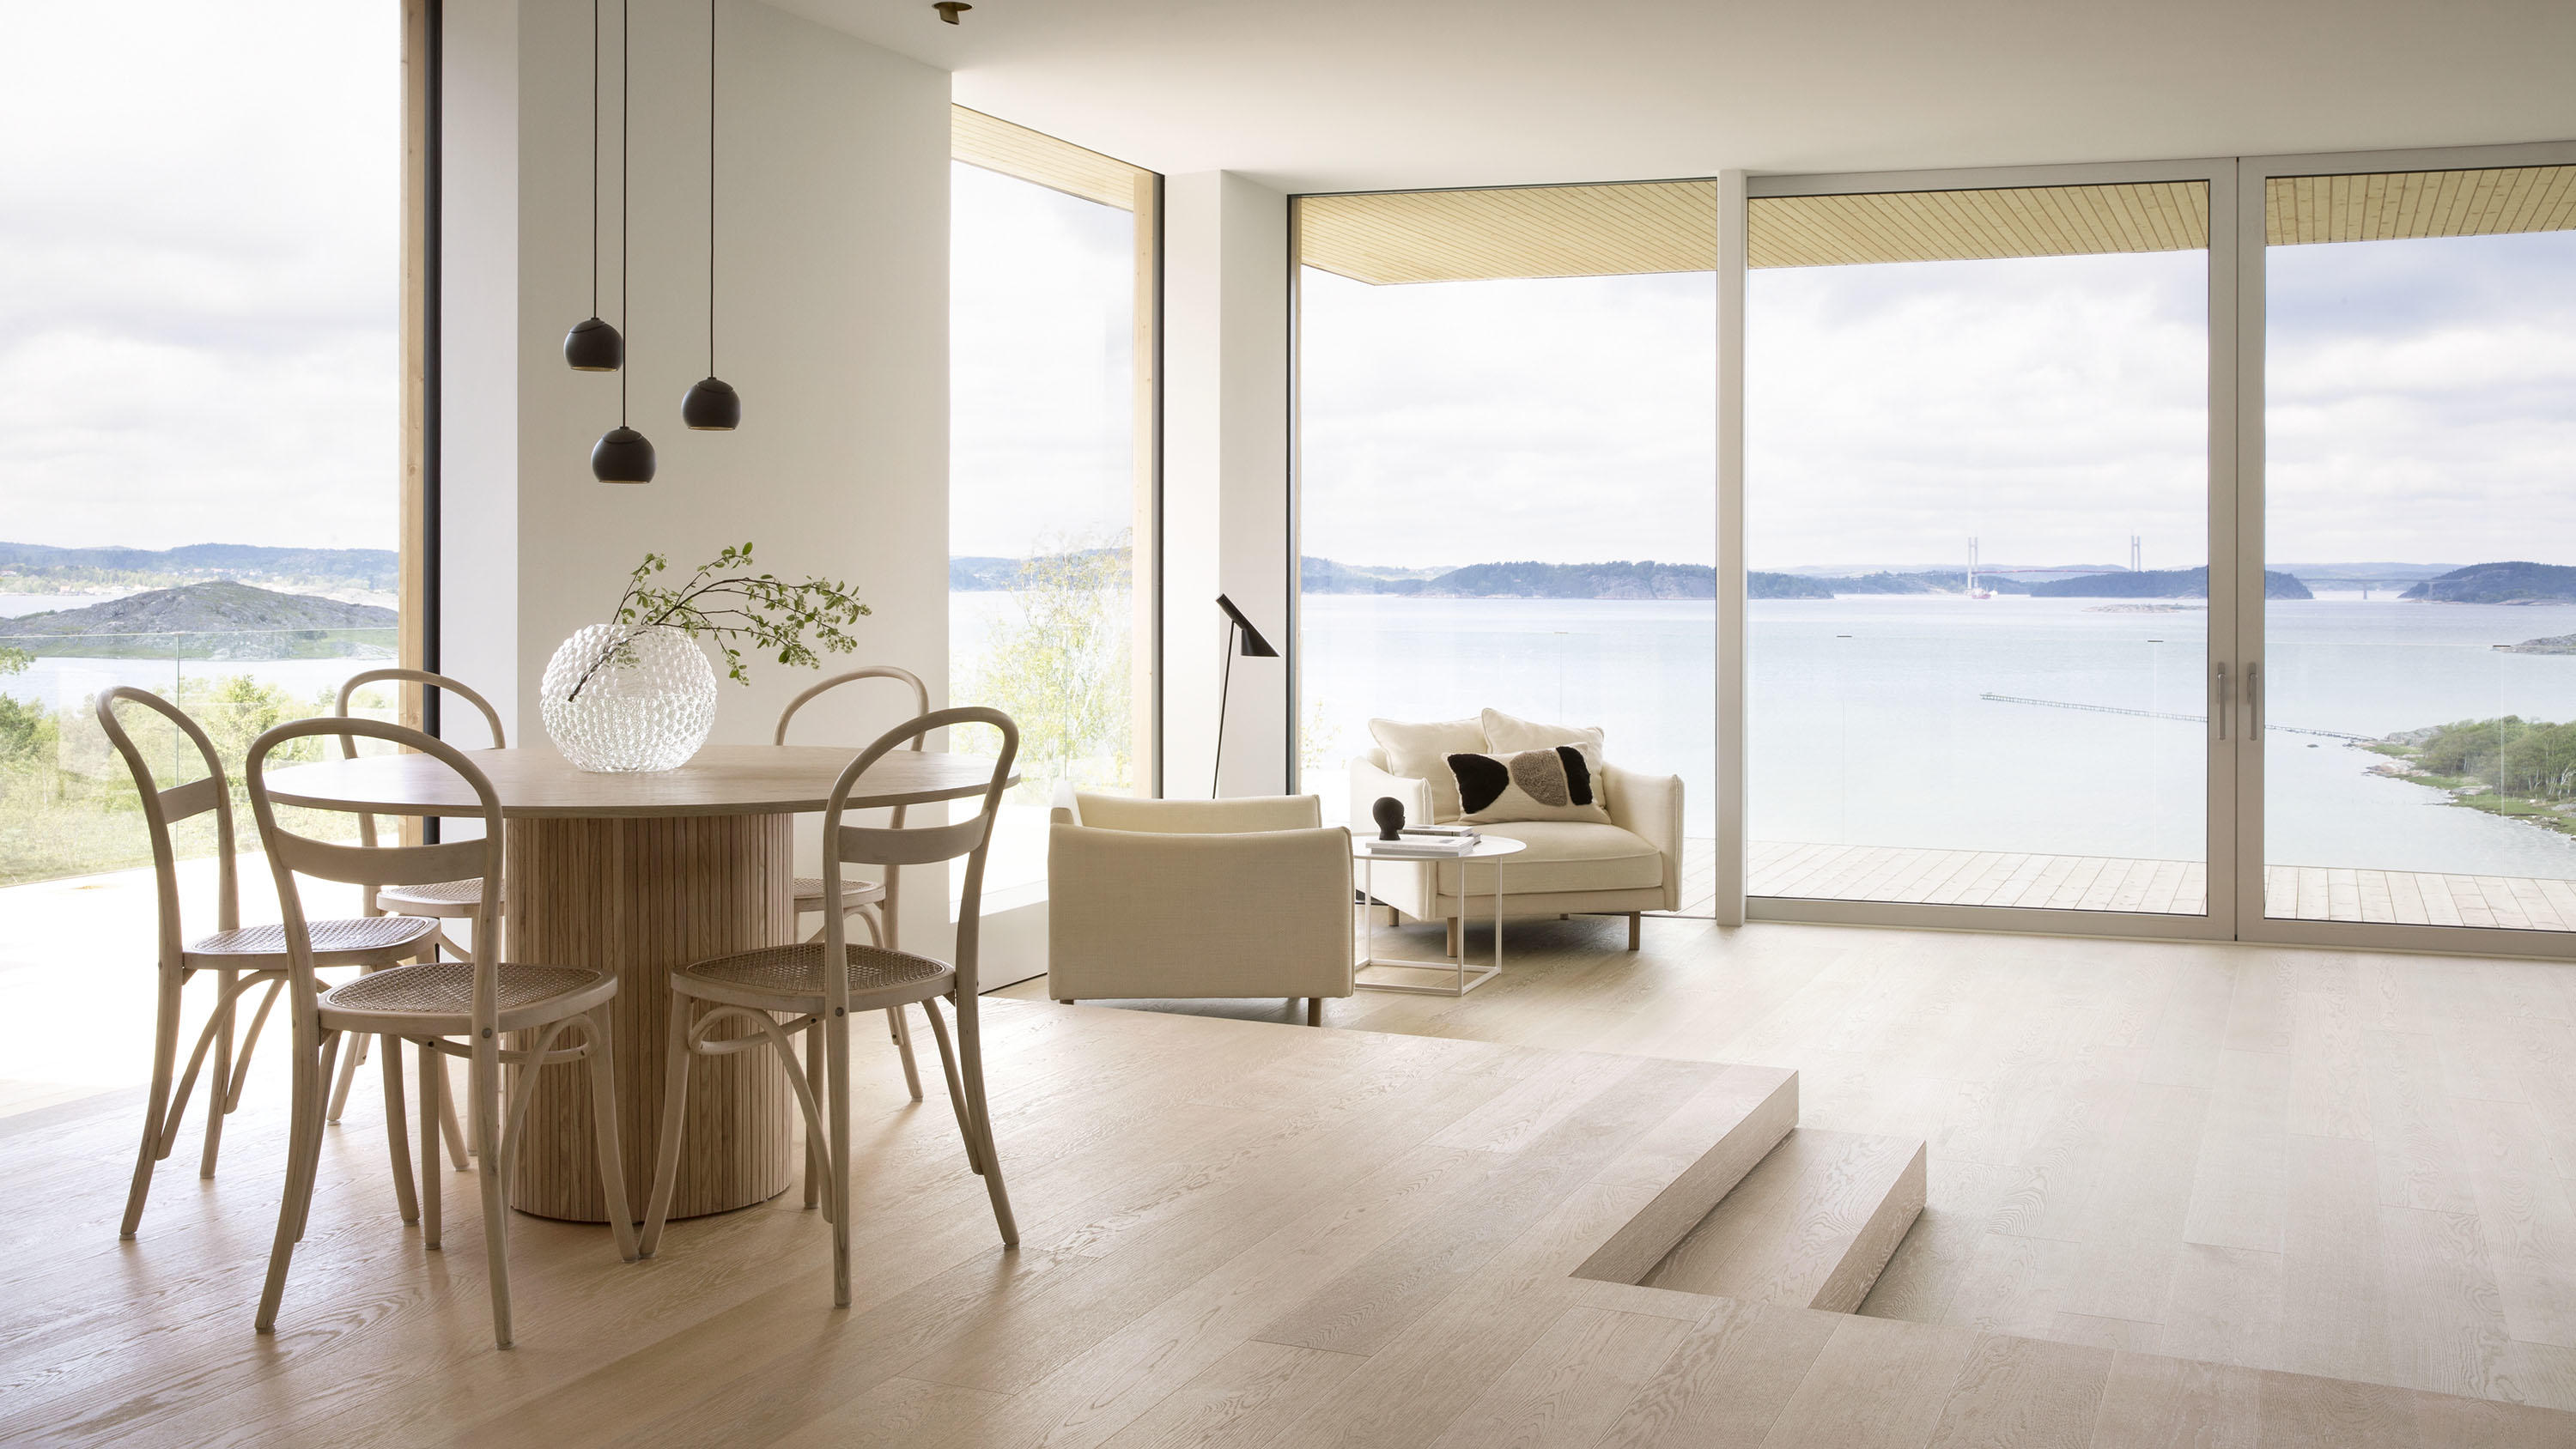 Tarkett Prestige Oak Sand parkett er skapt for skandinavisk interiør